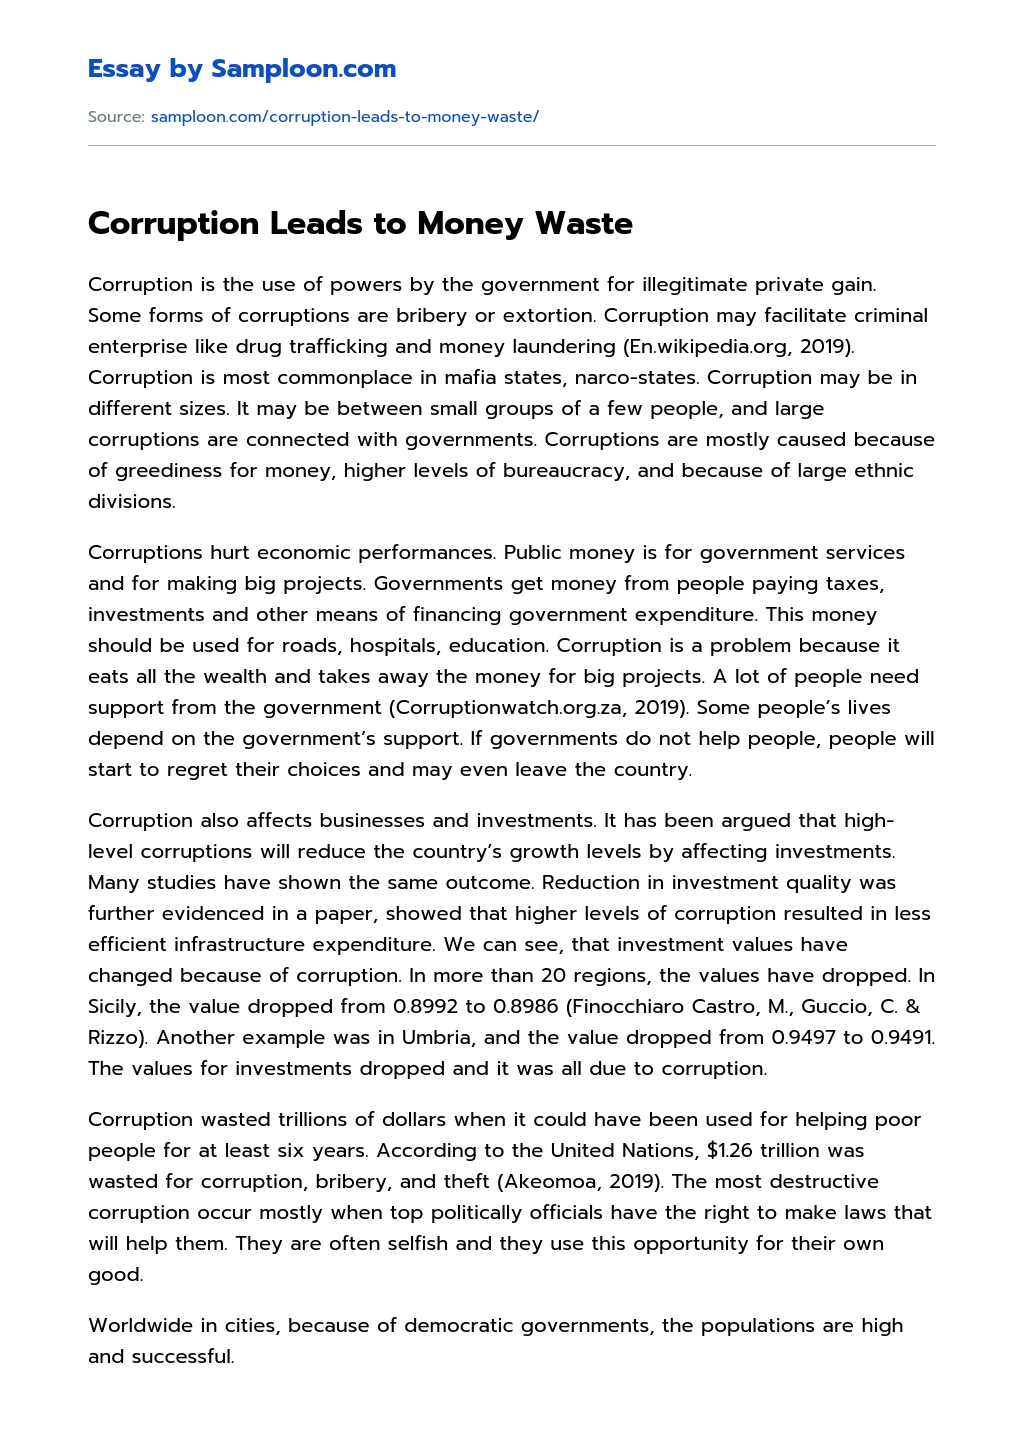 Corruption Leads to Money Waste essay